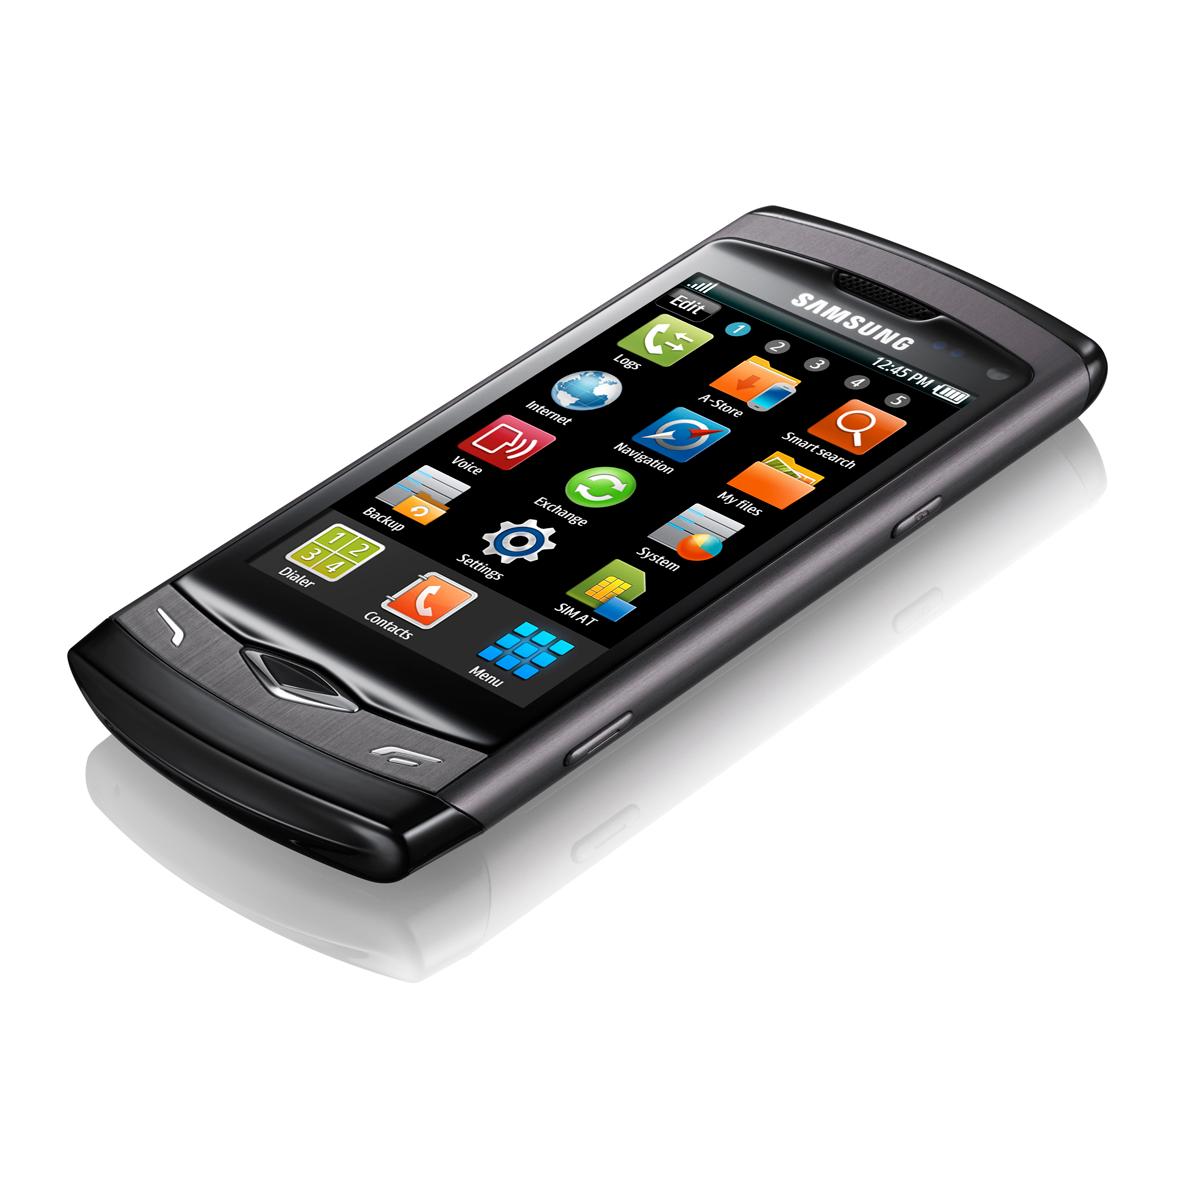 Samsung Wave var først med operativsystemet Bada. Vi tror 2012 blir et skjebneår for operativsystemet.